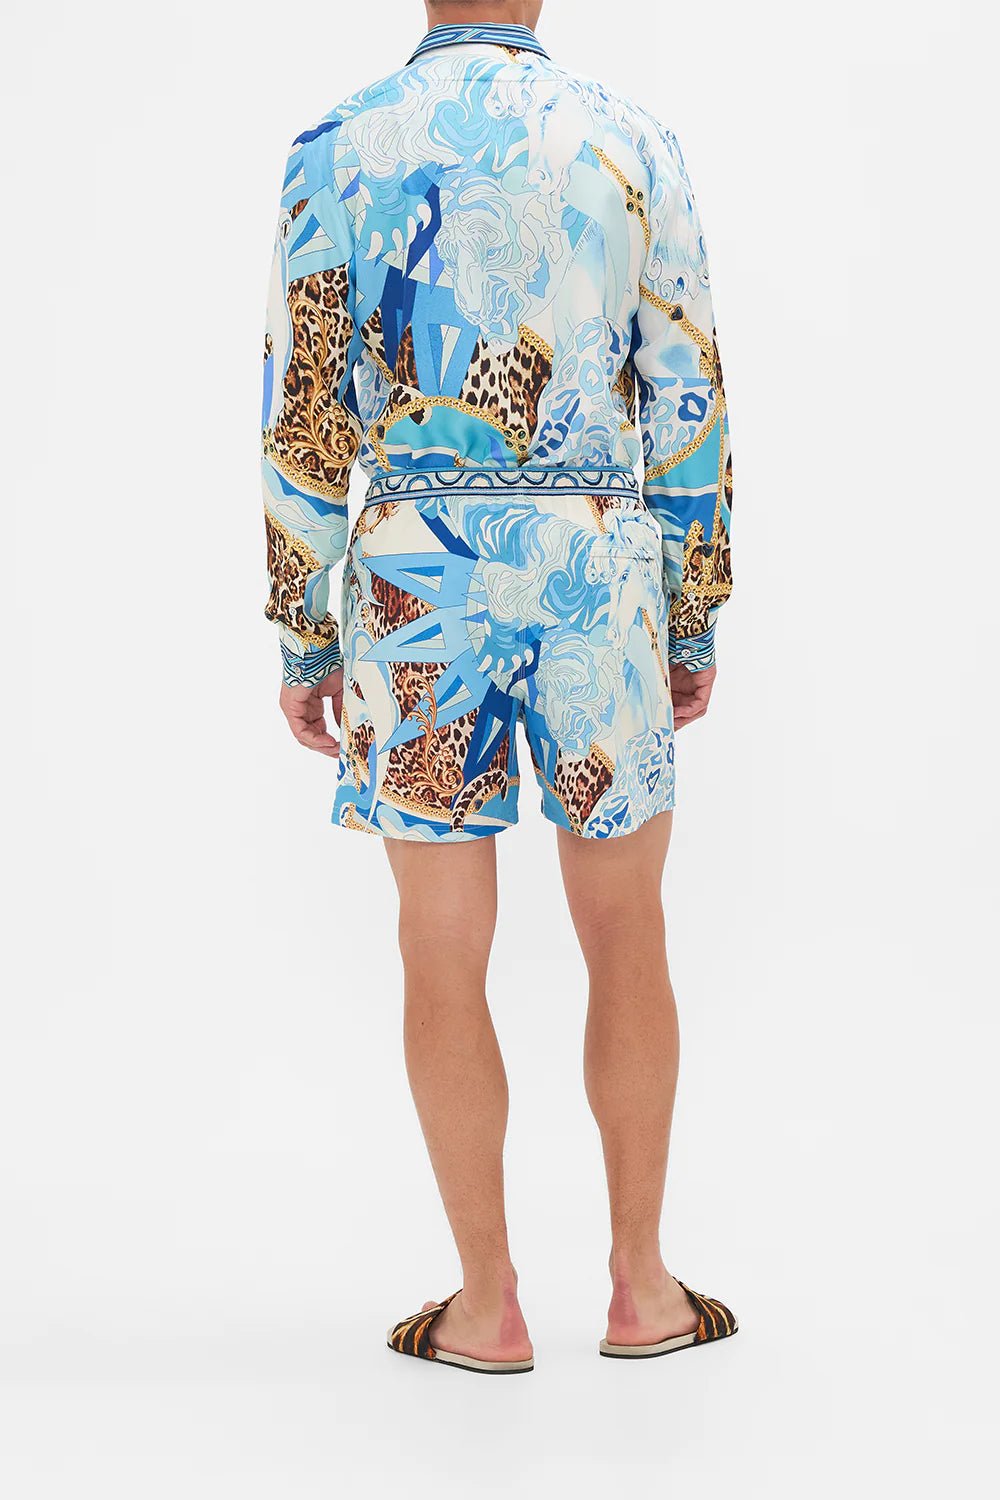 Camilla Mid Length Boardshort Sky Cheetah - Camilla - Pinkhill - darwin fashion - darwin boutique